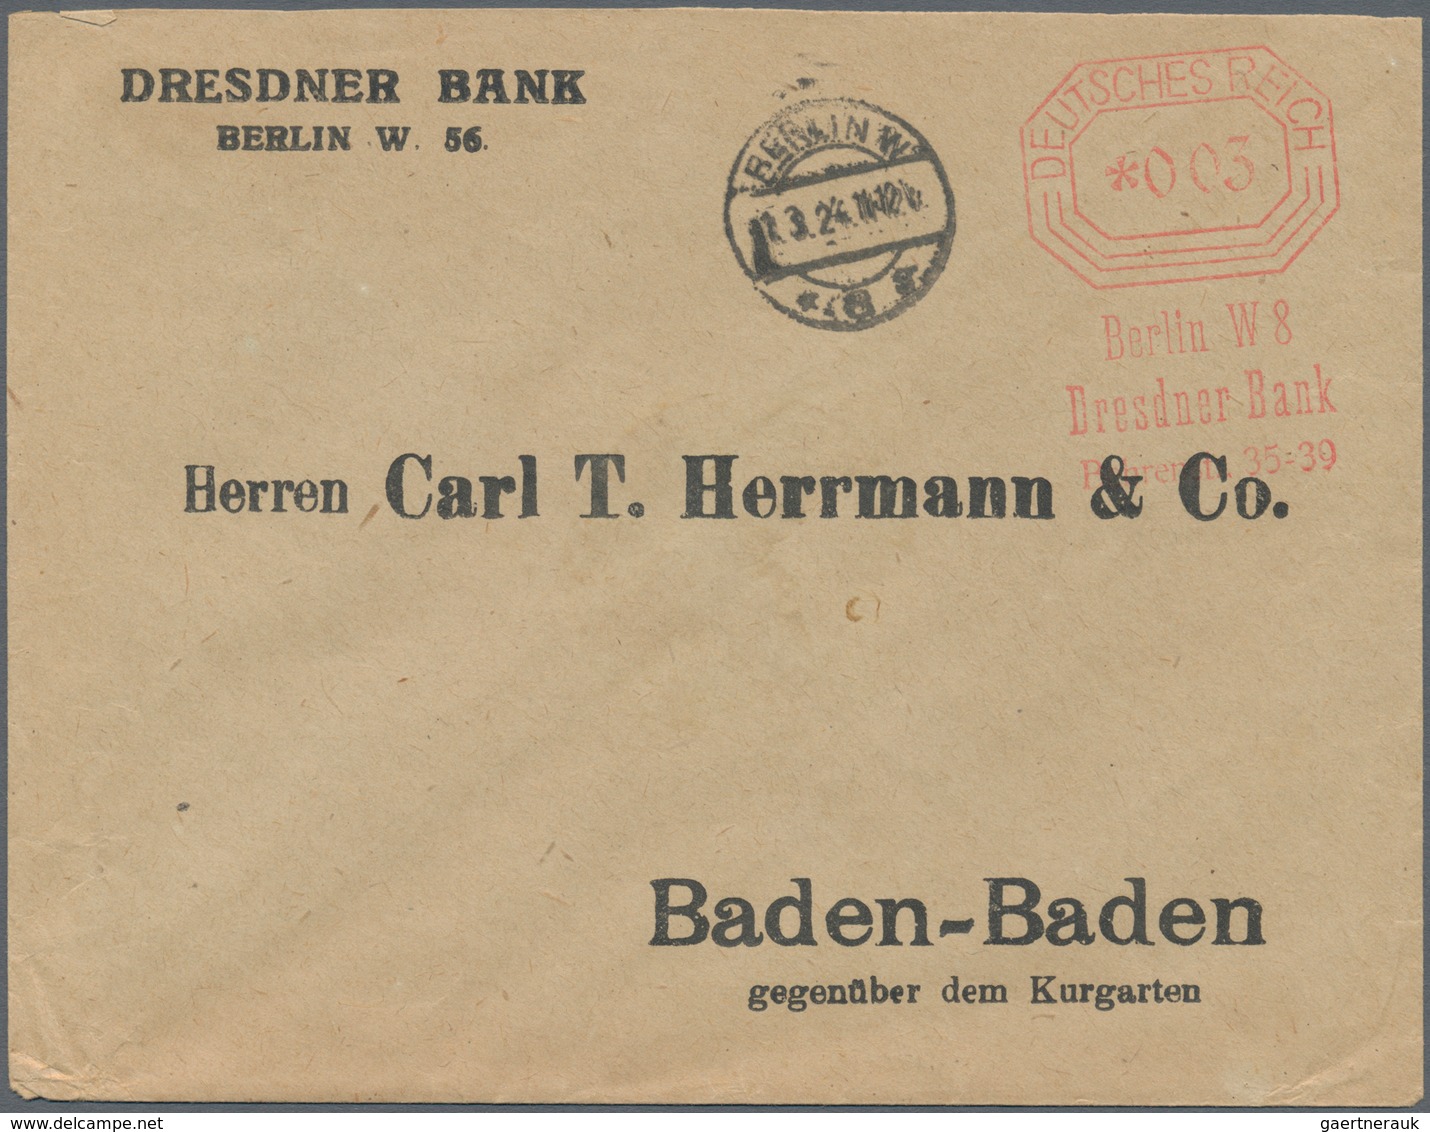 Deutsches Reich - Inflation: 1923 FIRMENFREISTEMPEL: Vier frühe, experimentelle Firmenfreistempel au